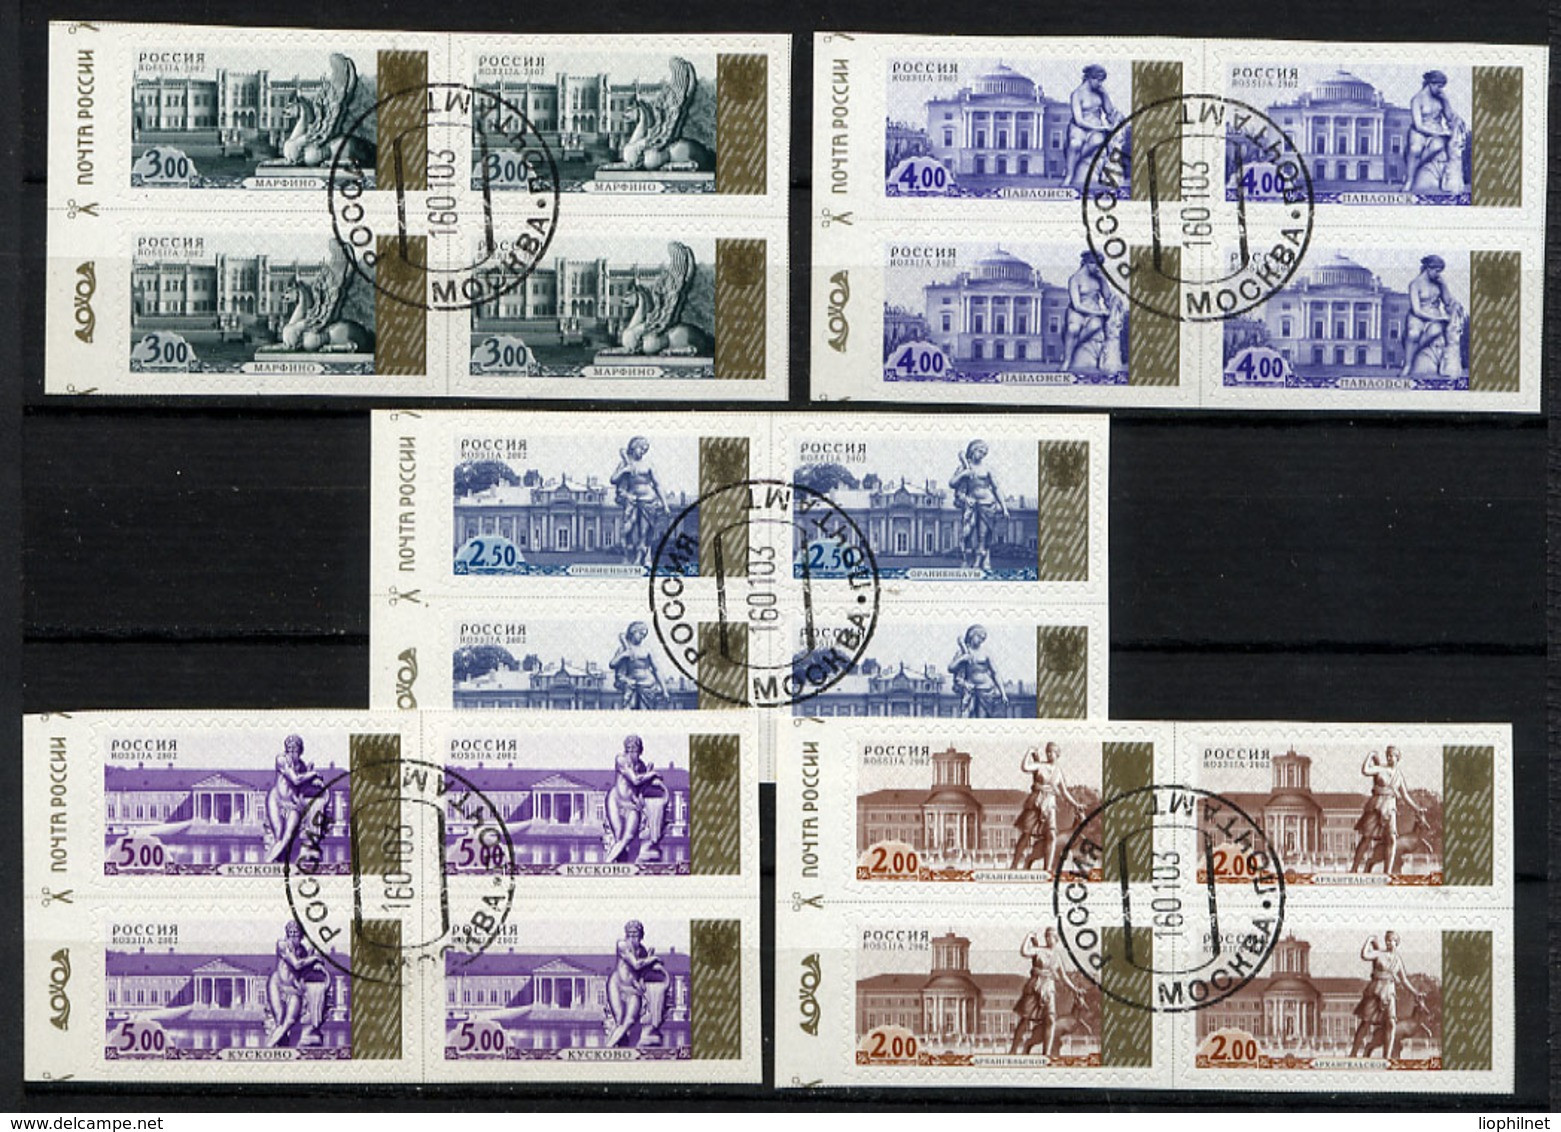 RUSSIE RUSSIA 2002, Série Courante / Definitive, 5 Valeurs X 4 Se-tenant, Oblitérés / Used CTO. R2013x4 - Used Stamps